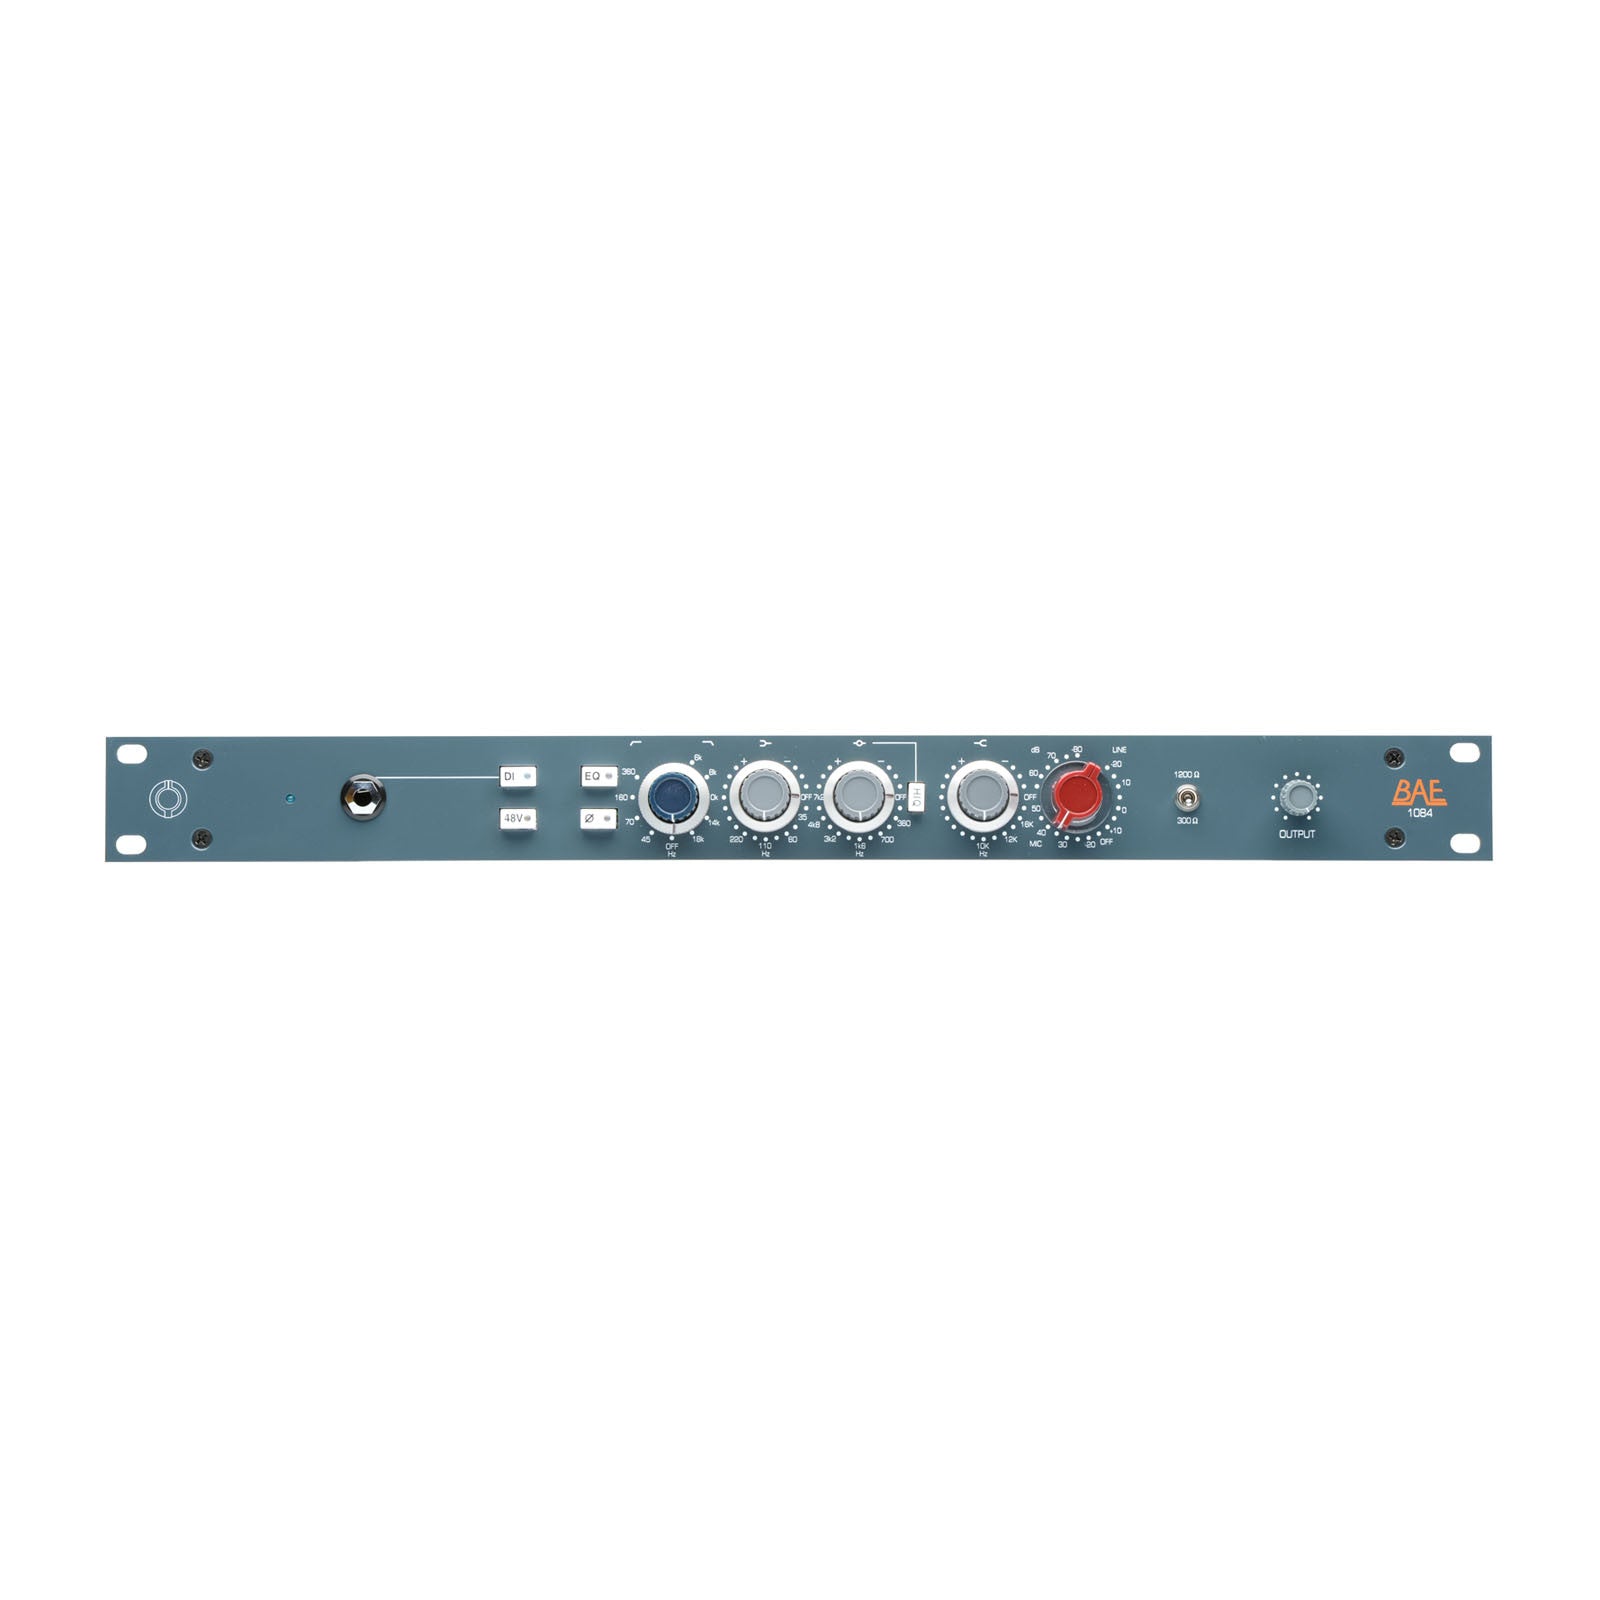 Recording Equipment - BAE Audio - BAE PAIR 1084WPS-Pair, 19" Rackmount Version, With Power Supply - Professional Audio Design, Inc